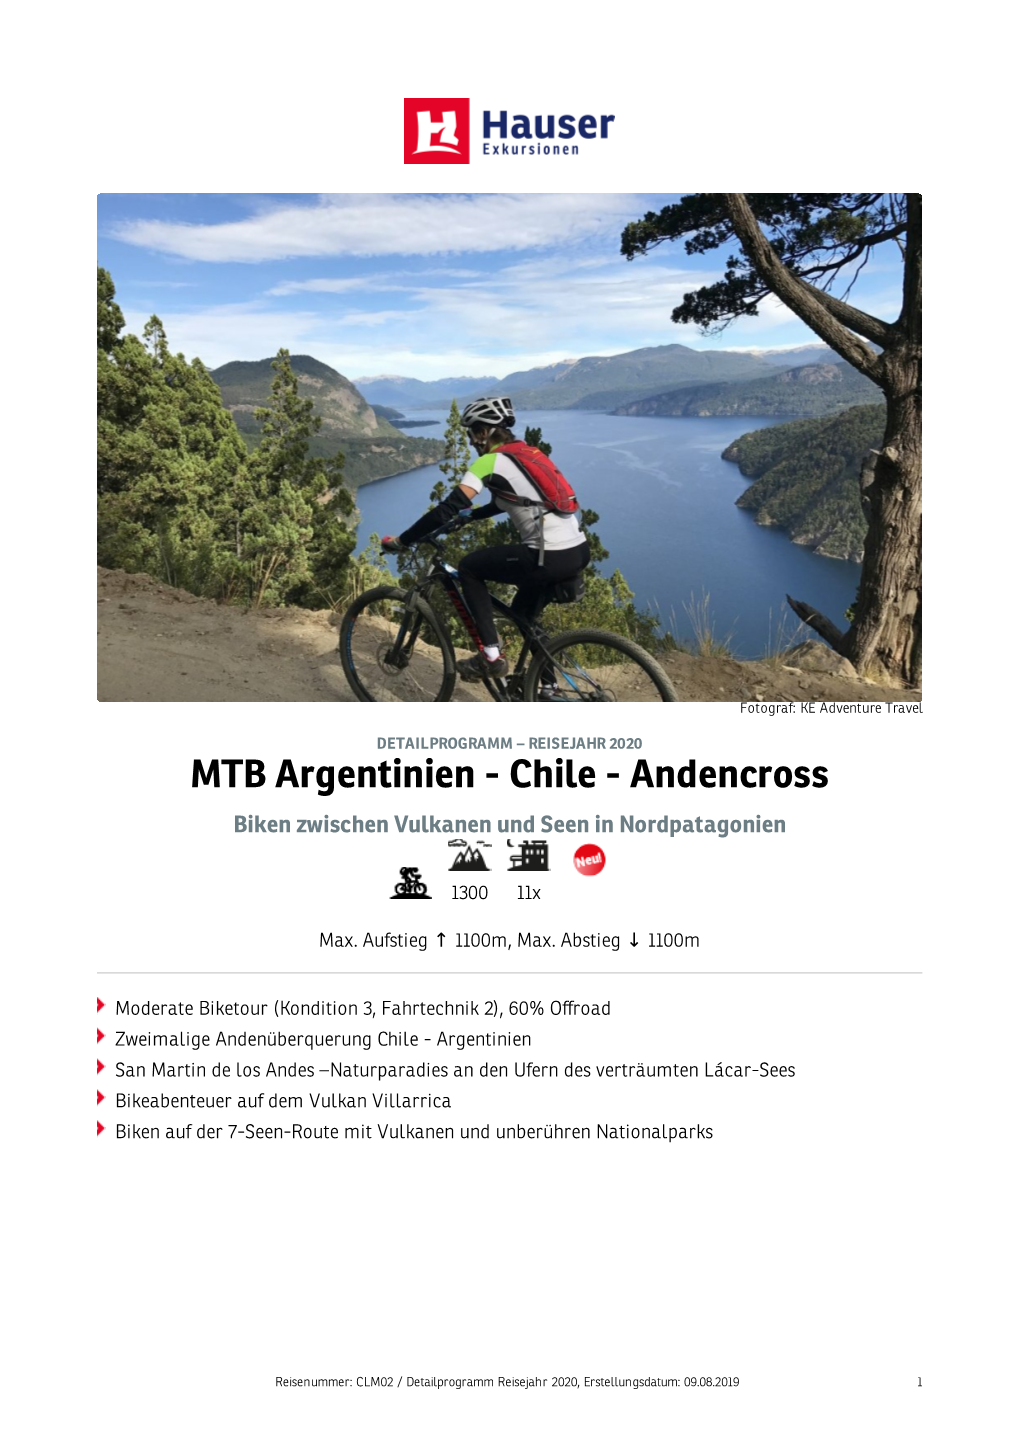 Chile - Andencross Biken Zwischen Vulkanen Und Seen in Nordpatagonien